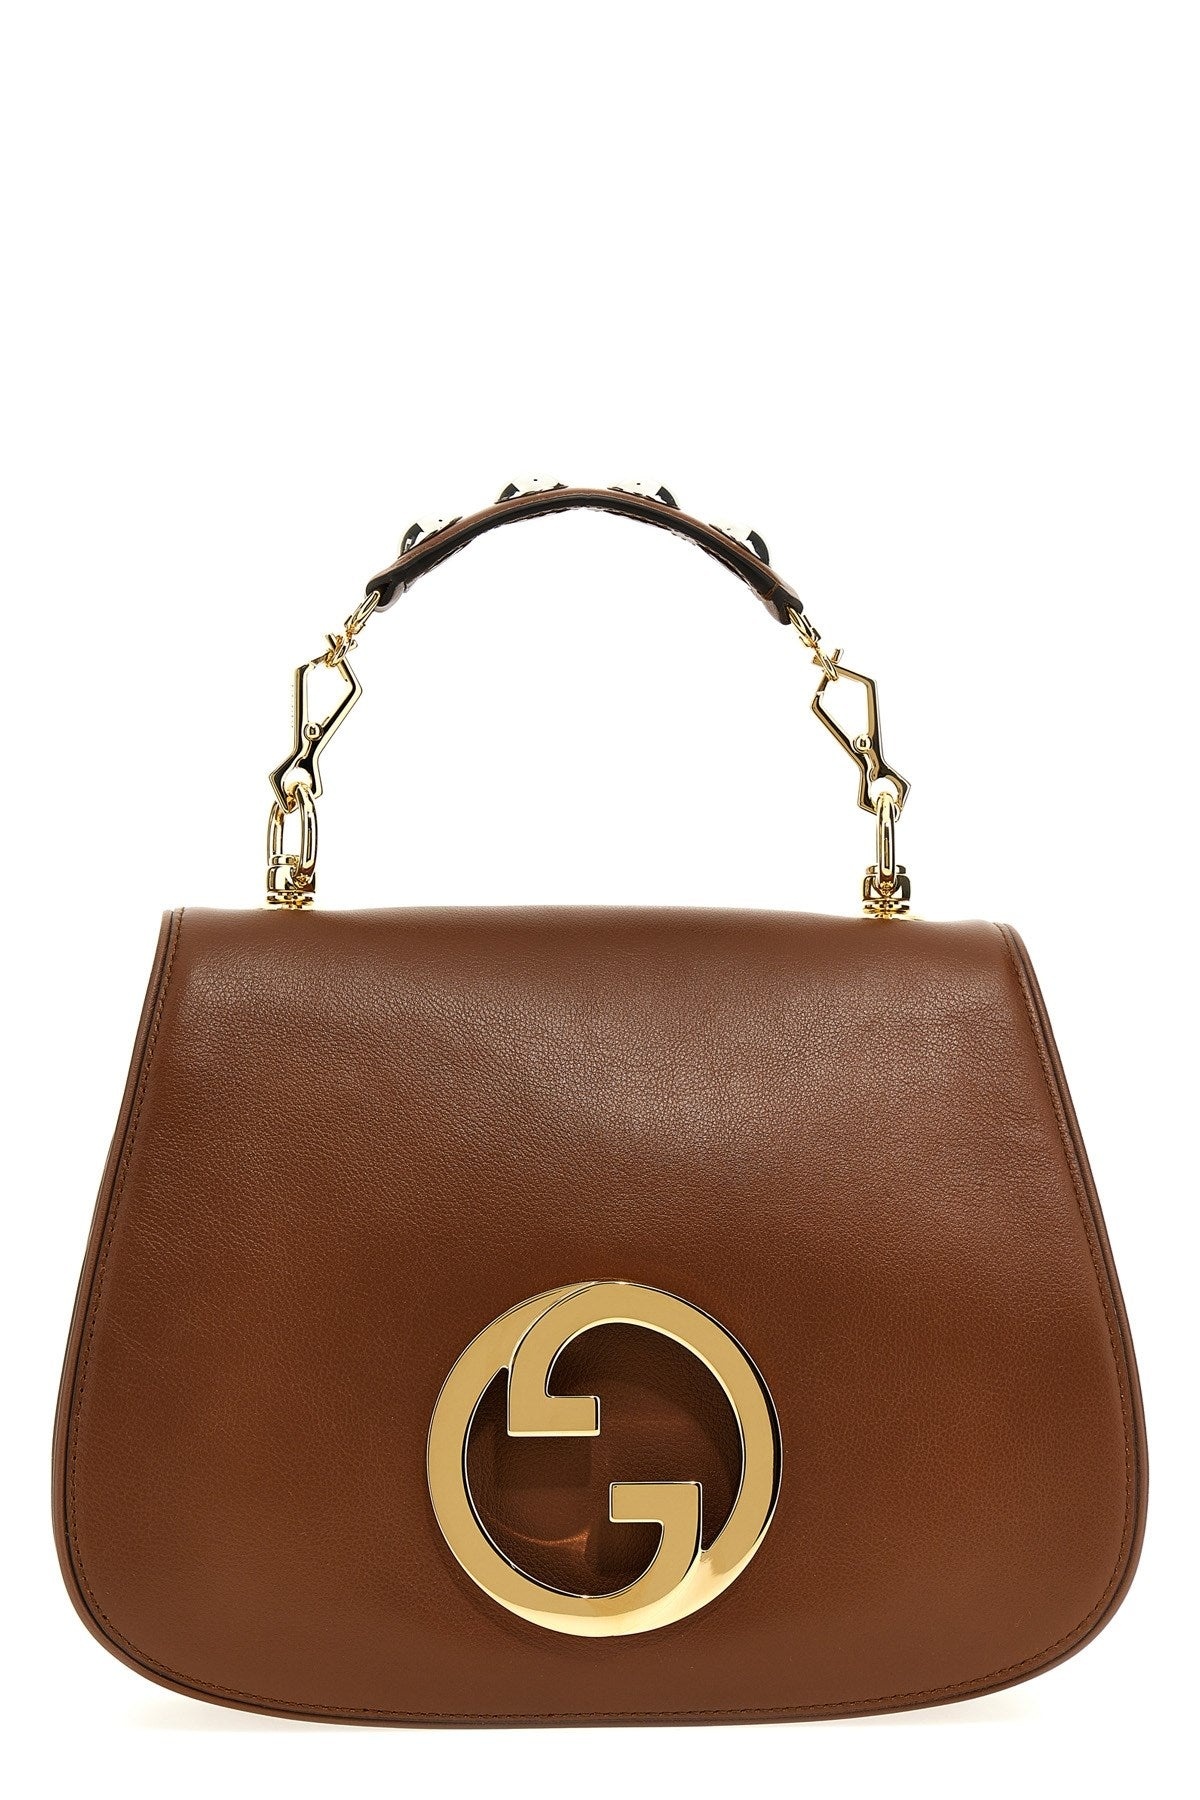 Gucci Women 'Blondie' Small Handbag - 1